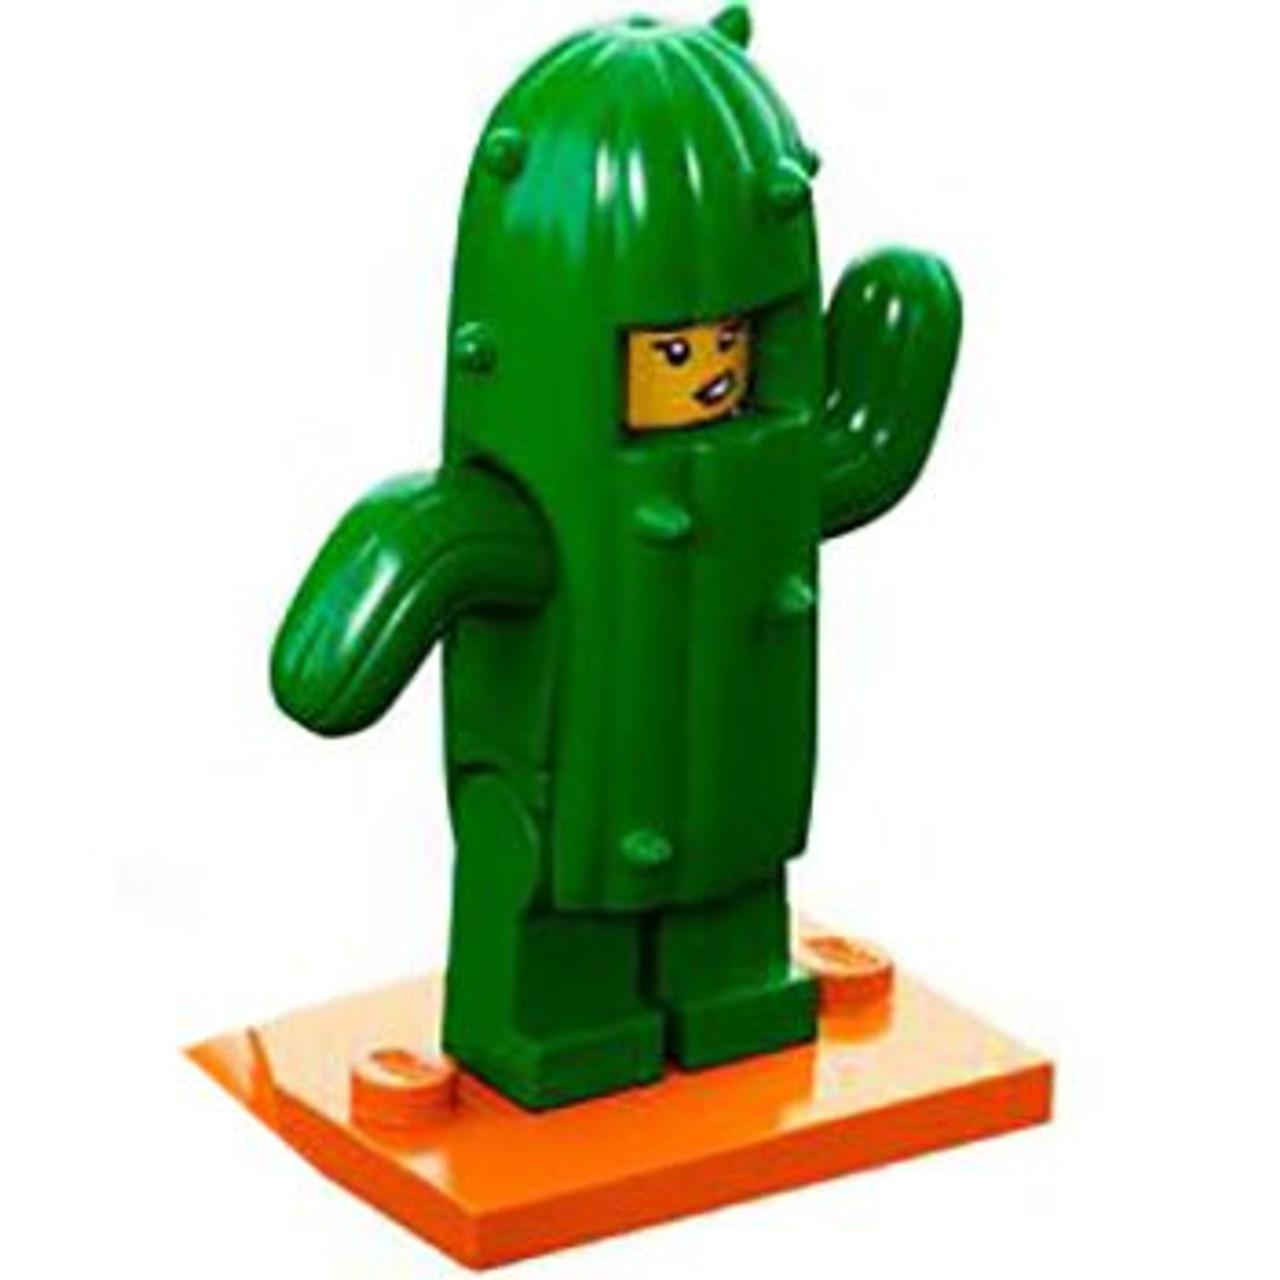 LEGO MINIFIGURES SERIE 18 71021 - 11 CACTUS GIRL ragazza cactus